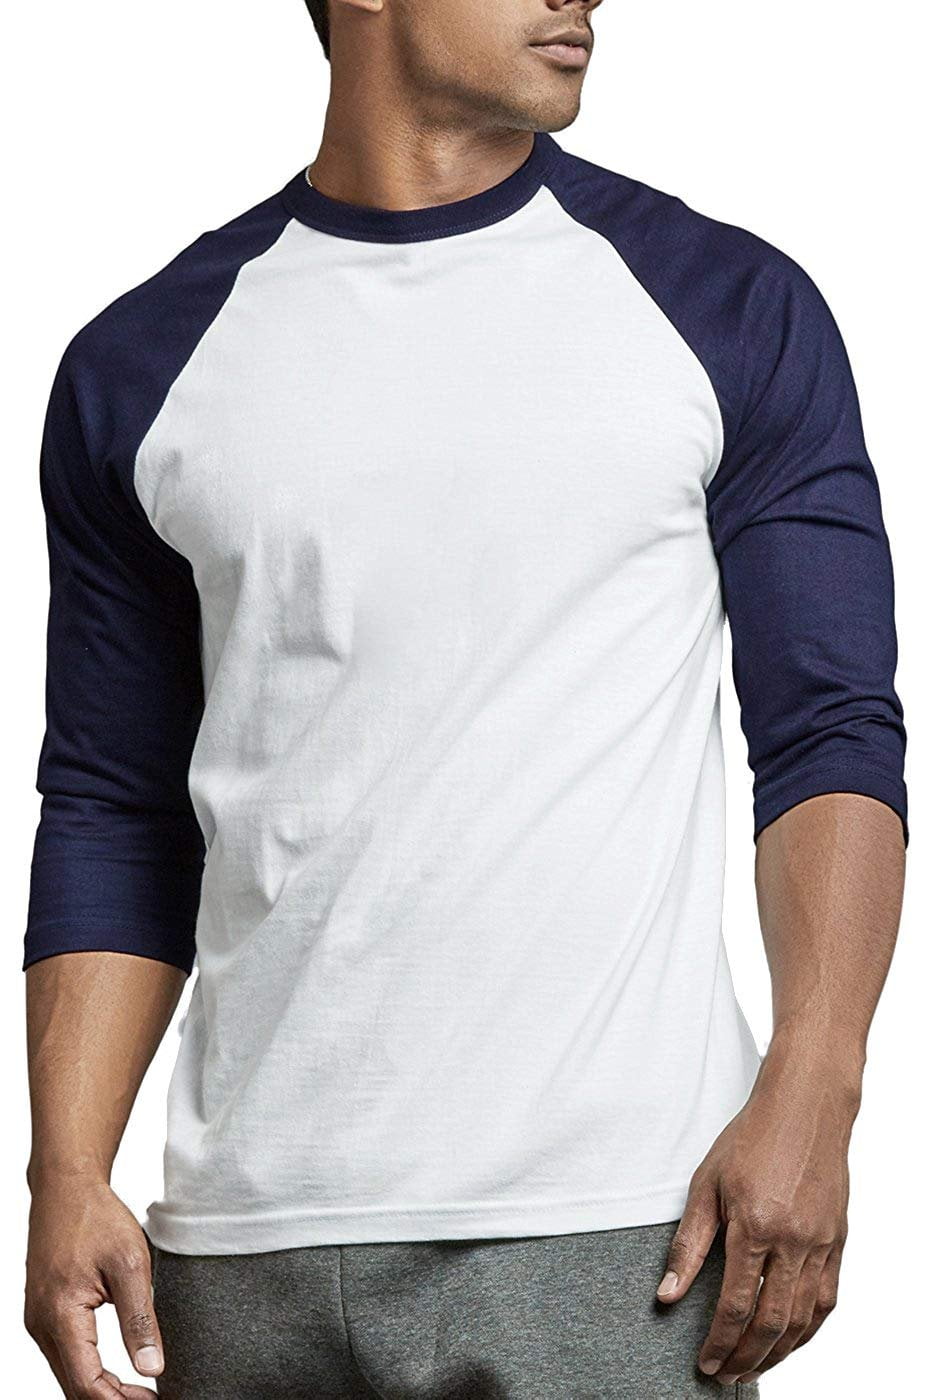 DailyWear Mens Casual 3/4 Sleeve Plain Baseball Cotton T Shirts Navy ...